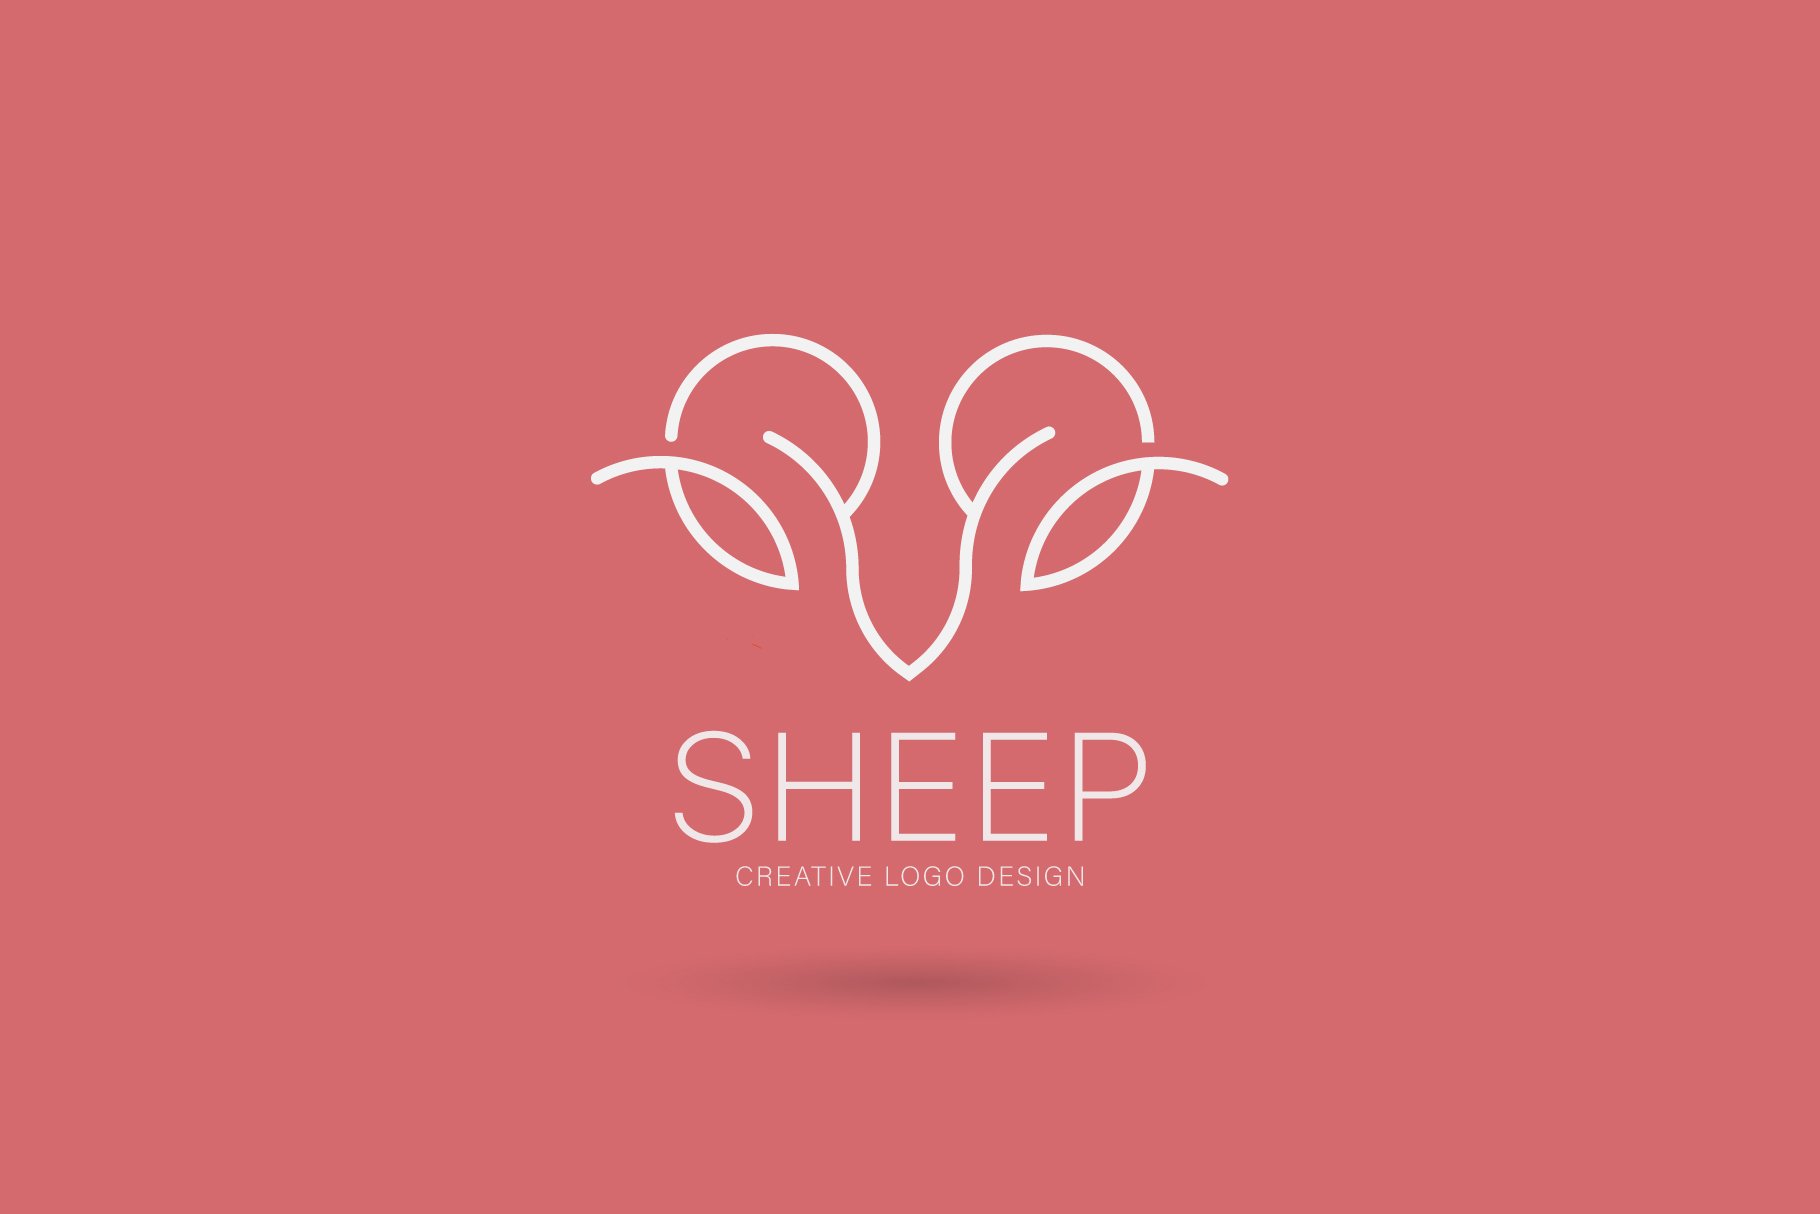 Sheep logo preview image.